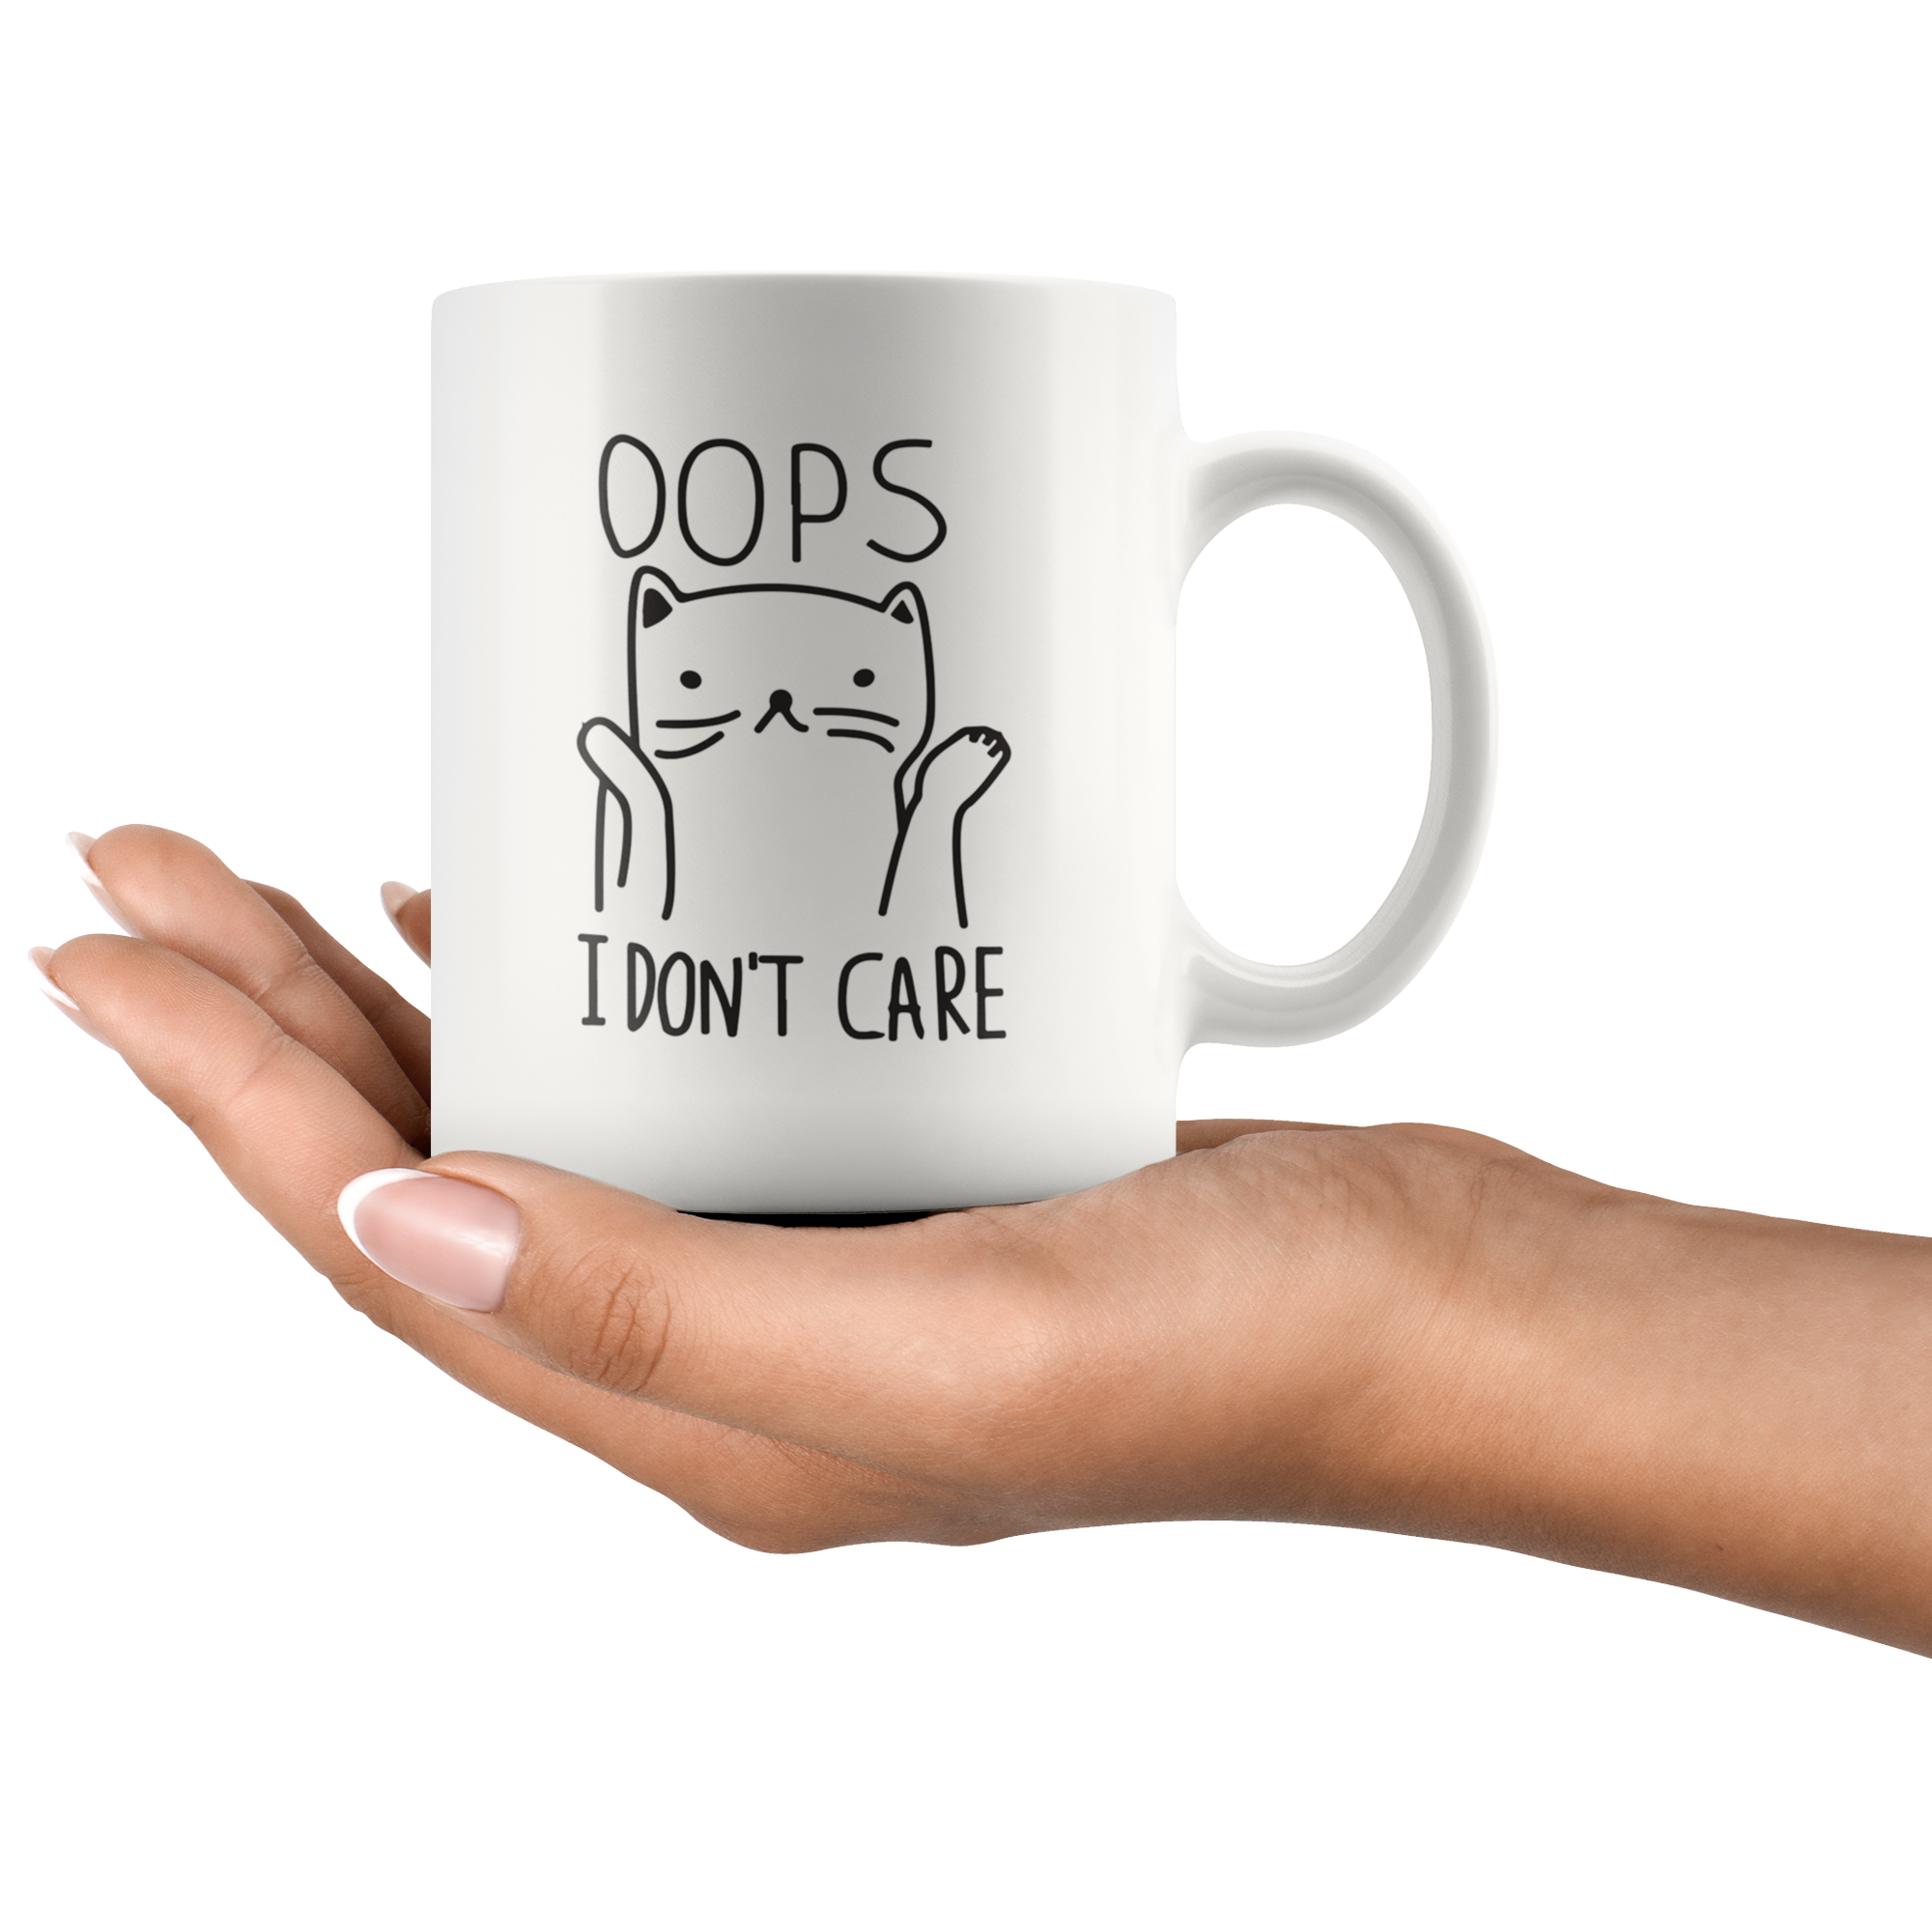 Oops I Don't Care Coffee Mug